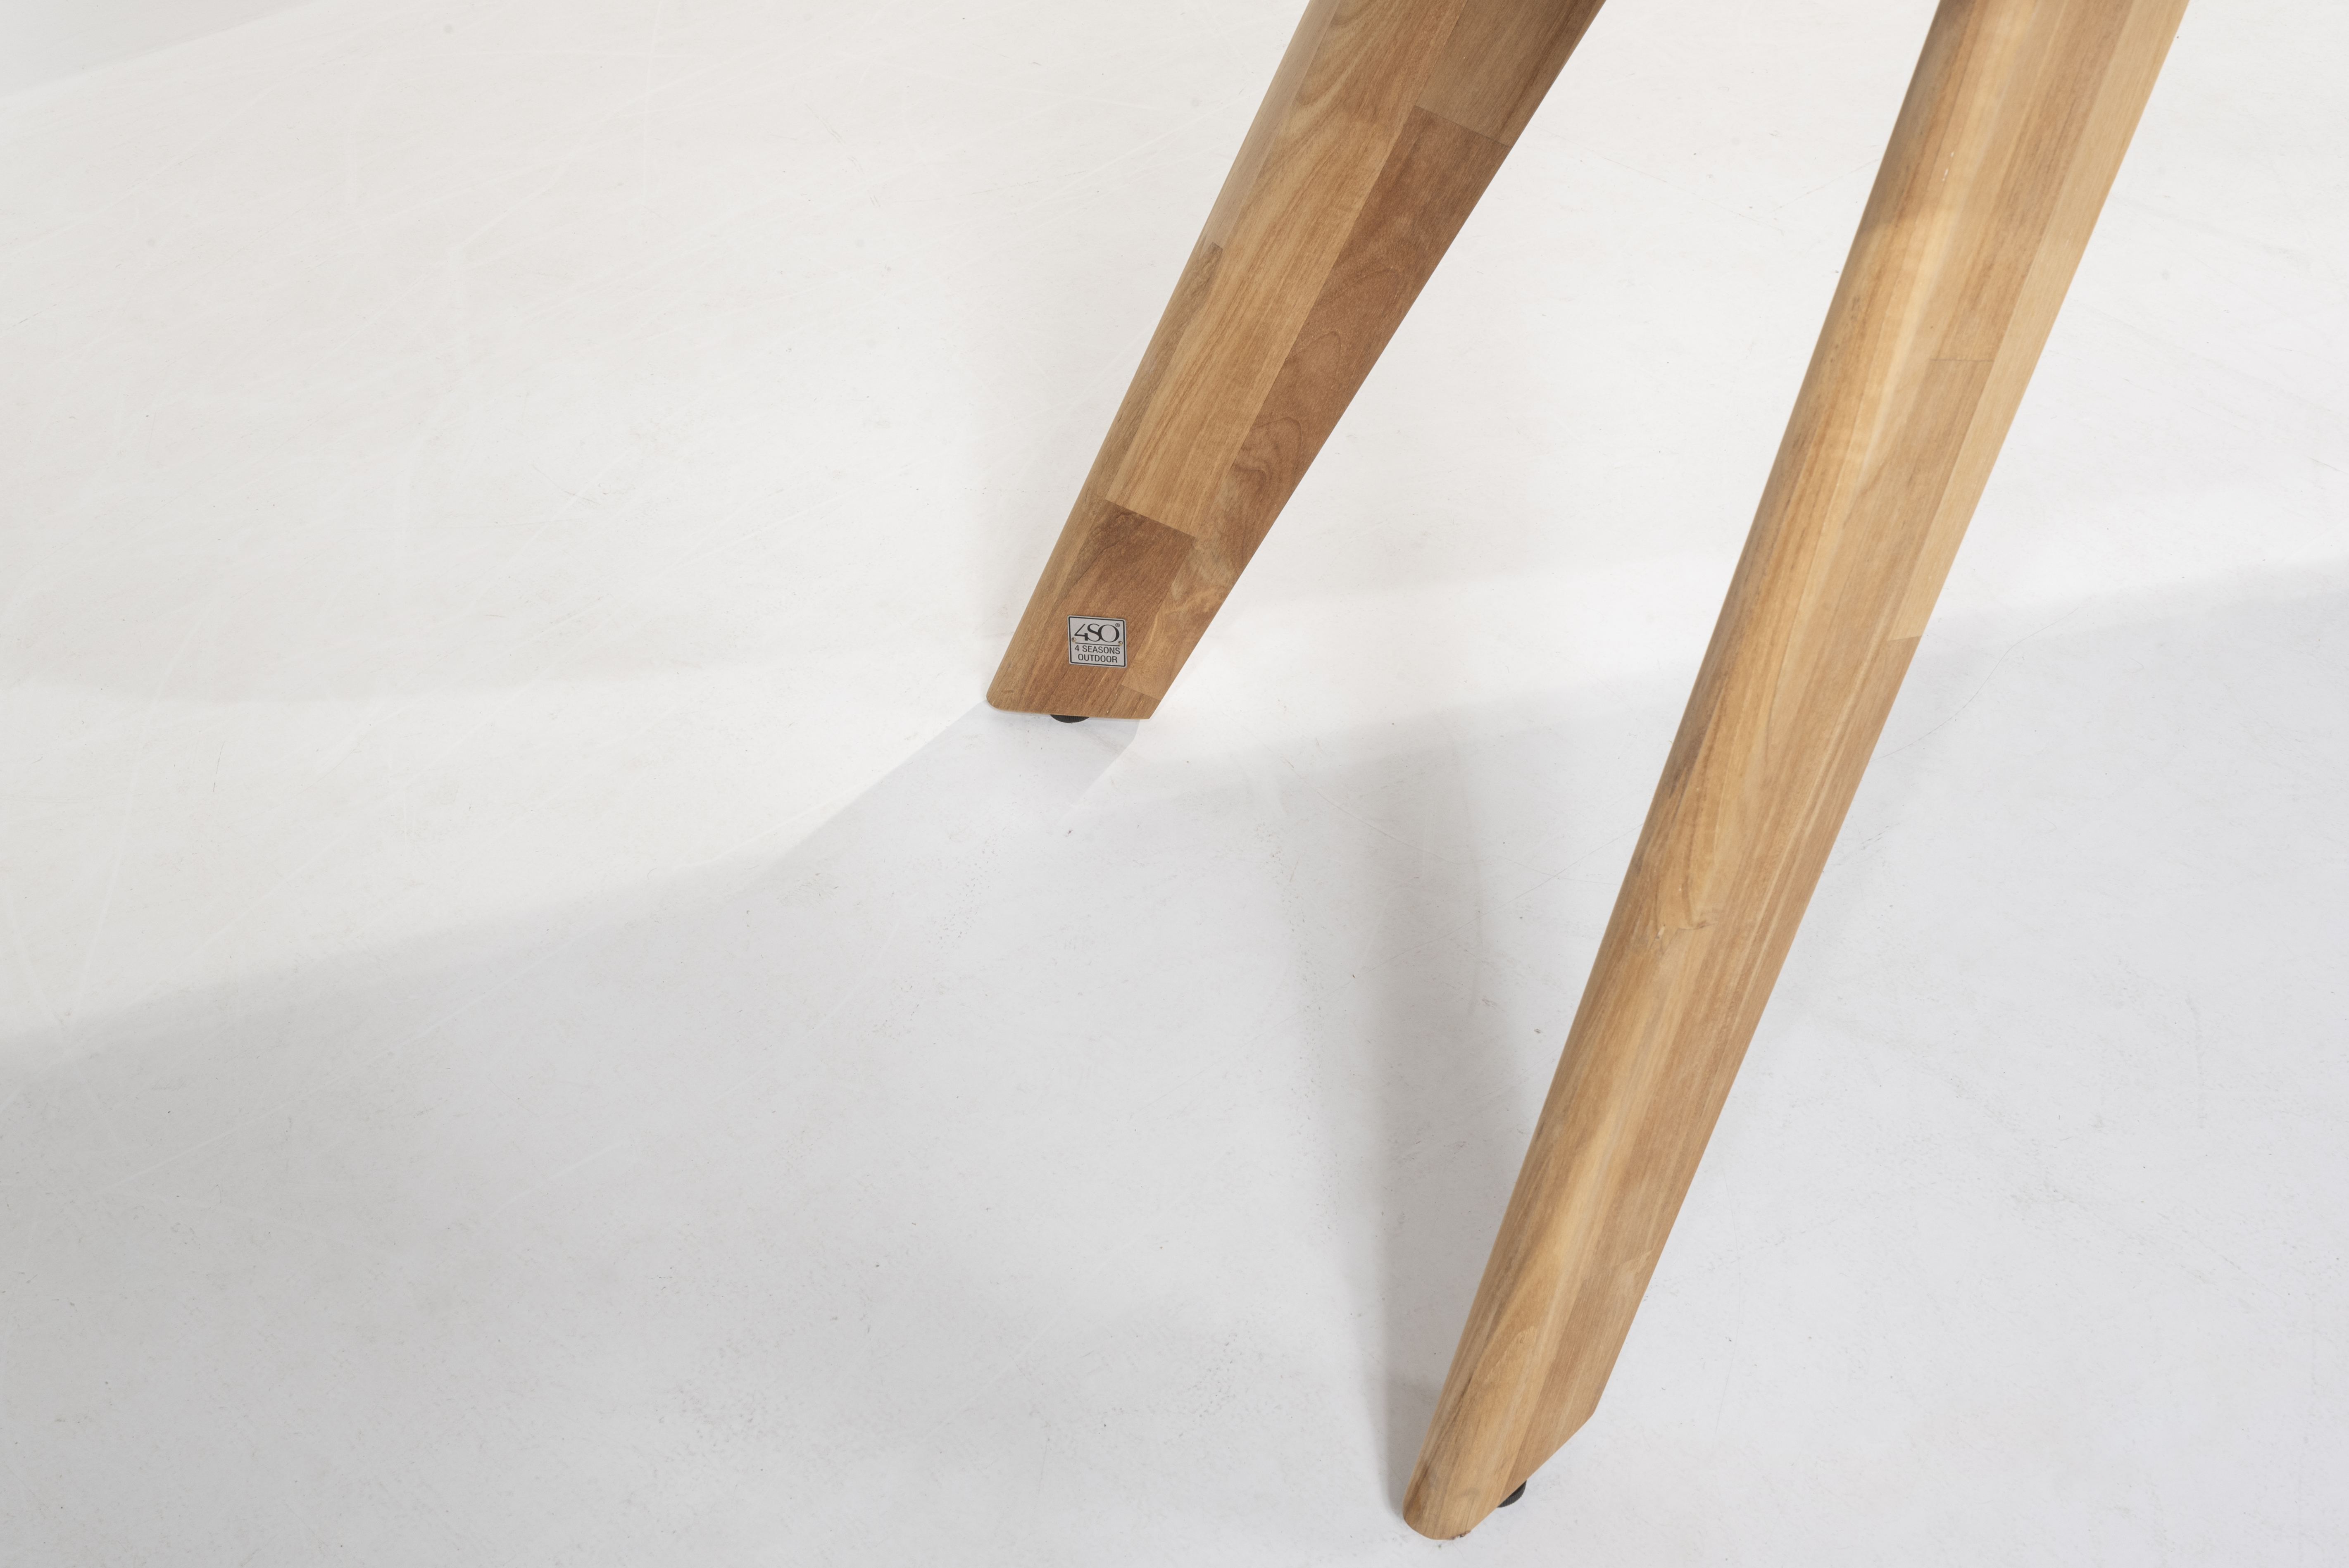 Montana dining table barrel shape Teak legs and Ceramic top detail _03